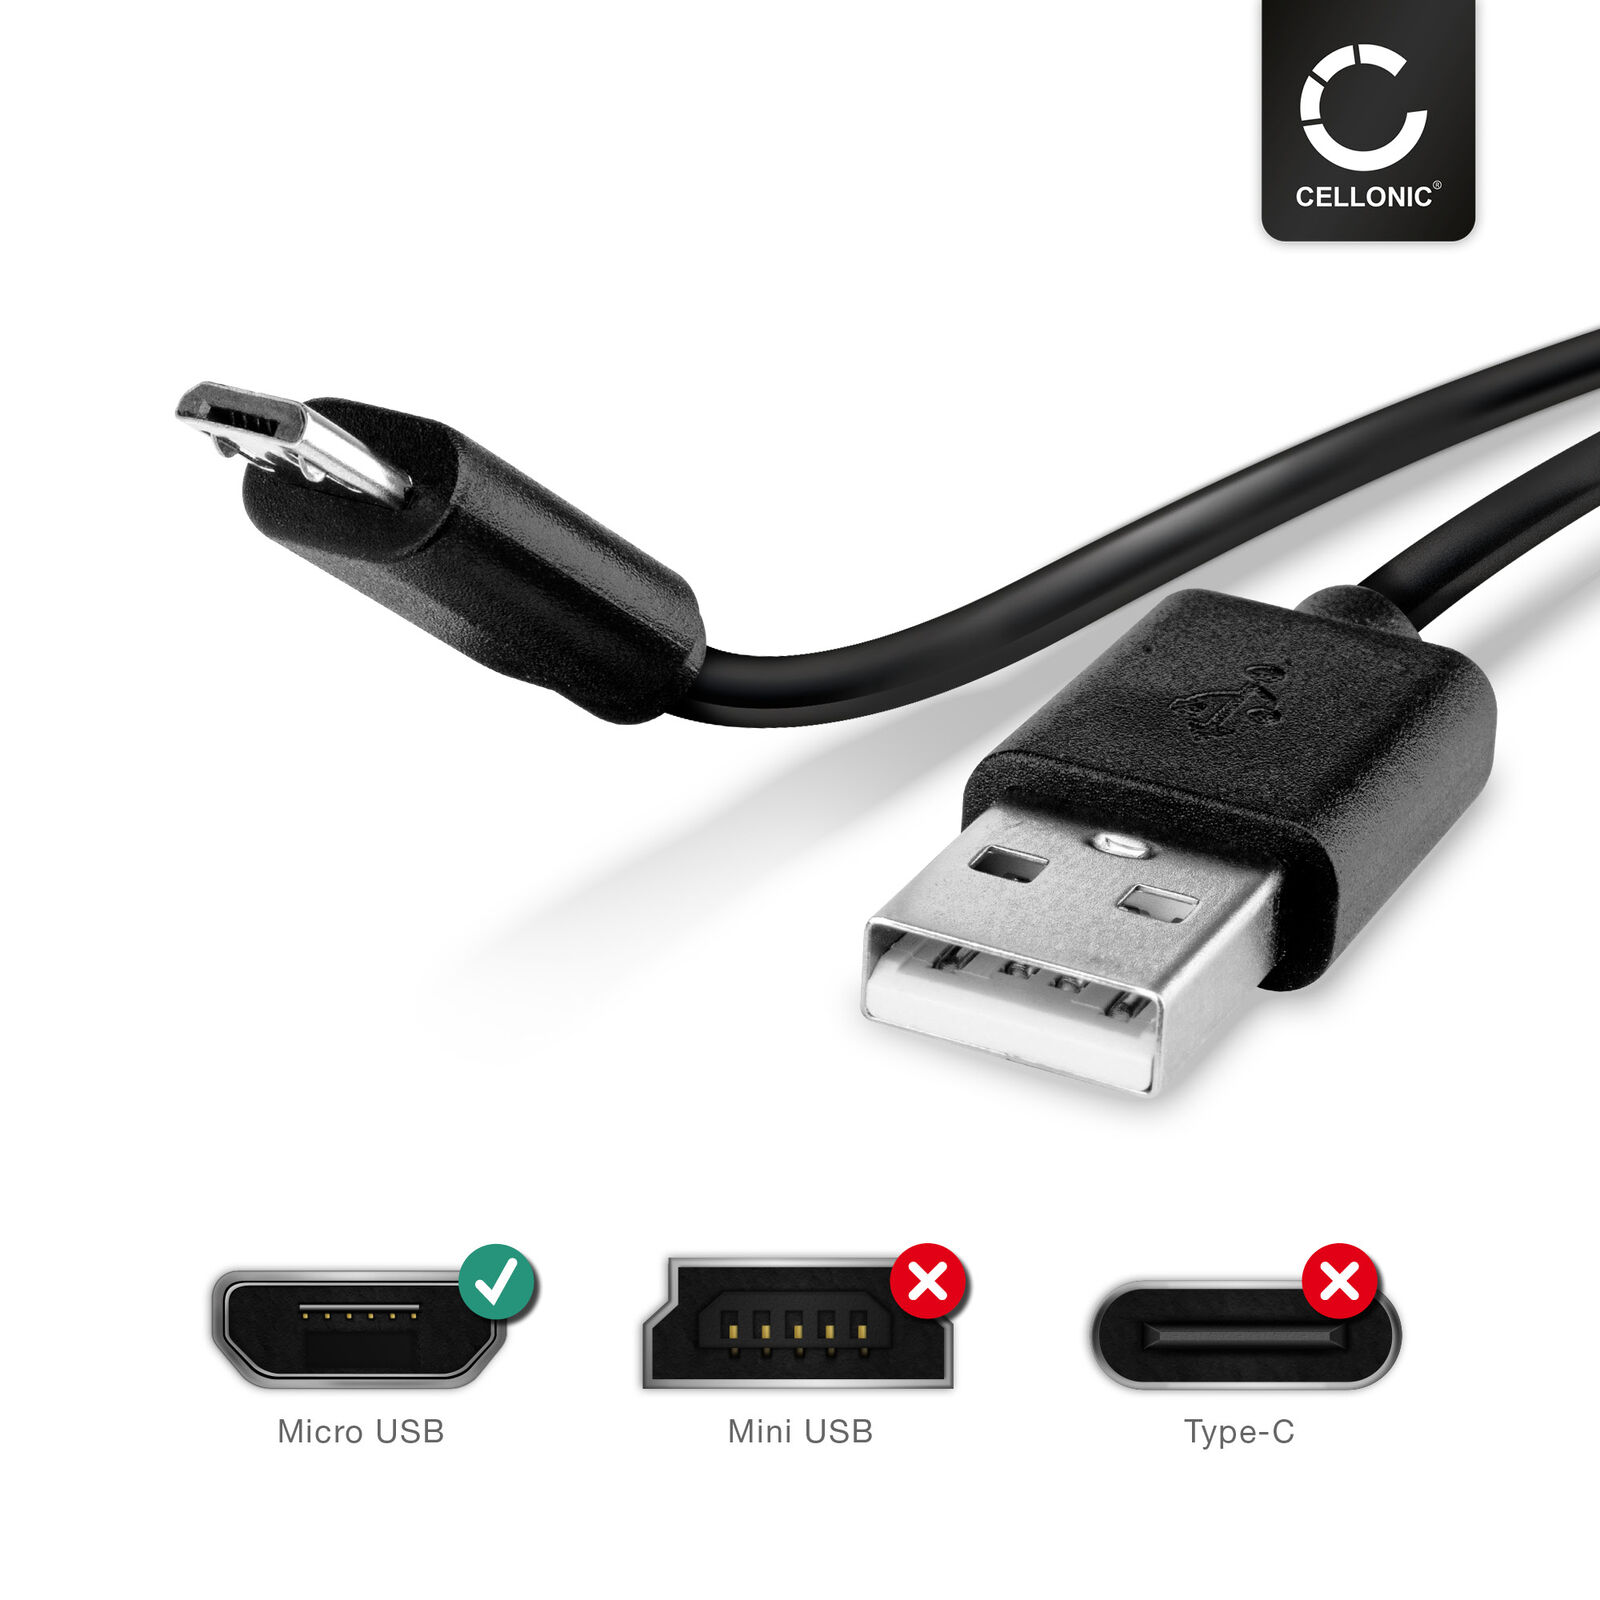  USB Kabel Sony Cyber-shot DSC-HX90 Cyber-shot DSC-HX80 Ladekabel 2A schwarz